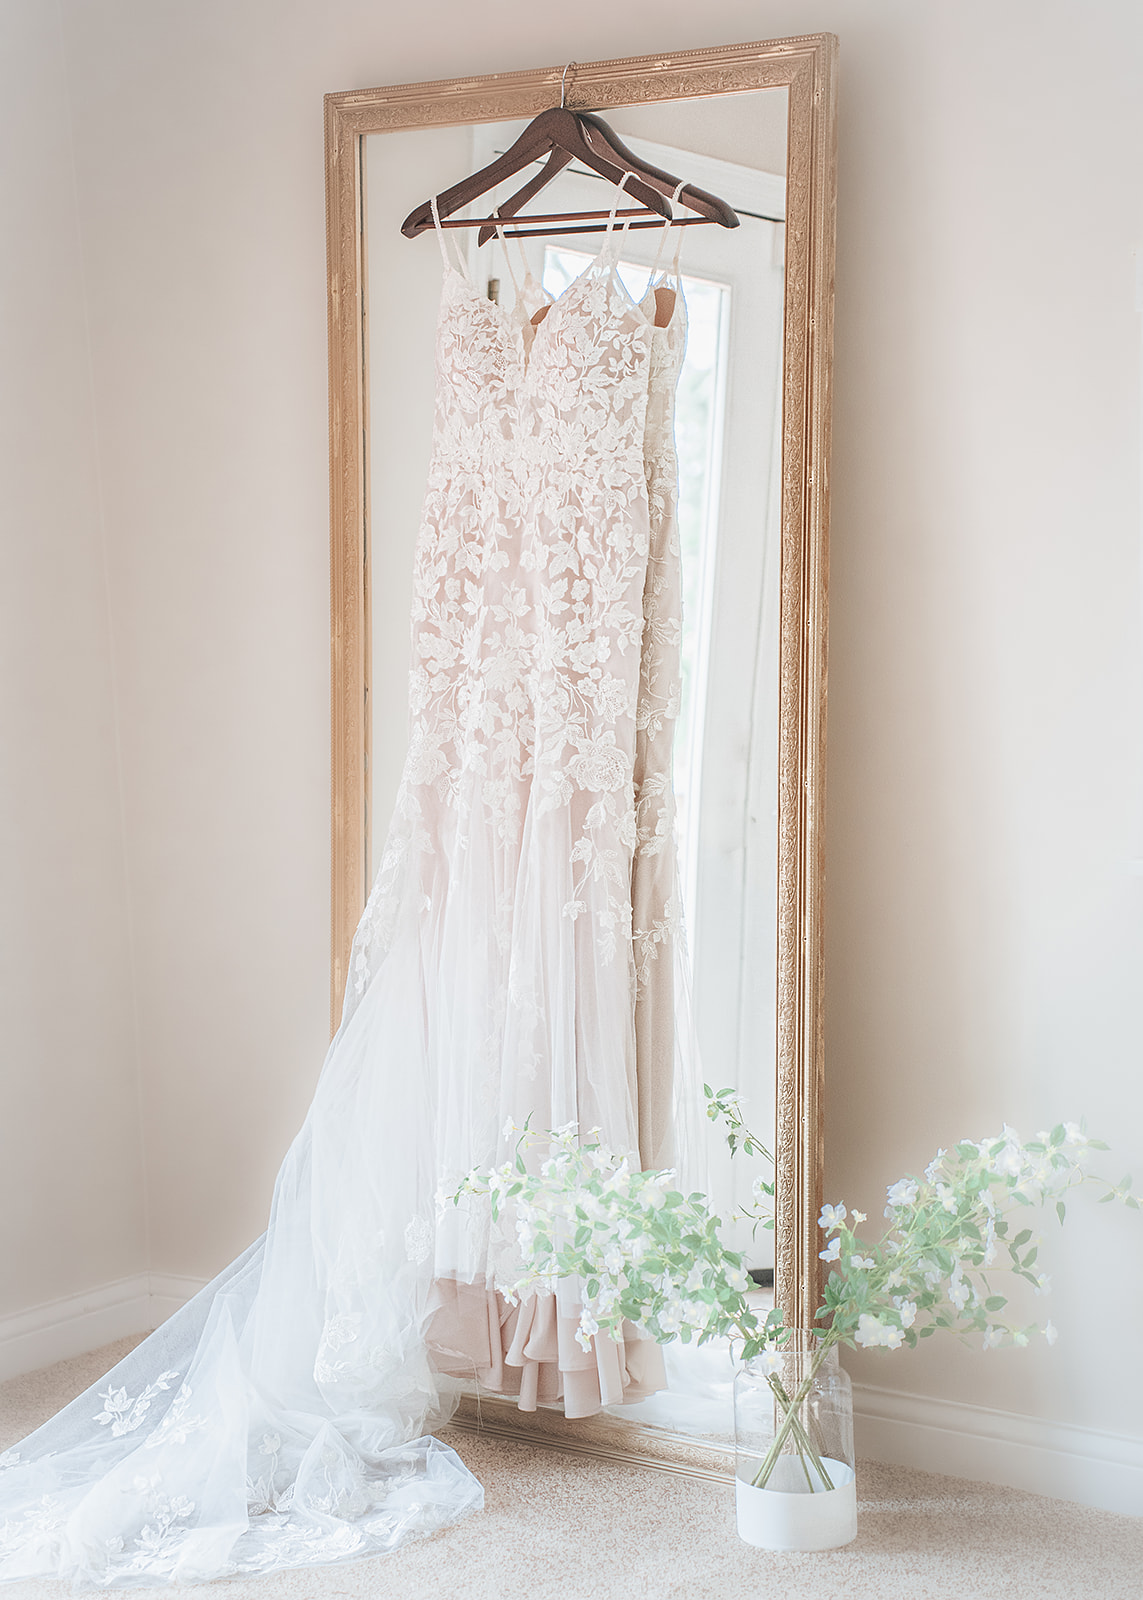 Artistic shot of dress hanging on mirror